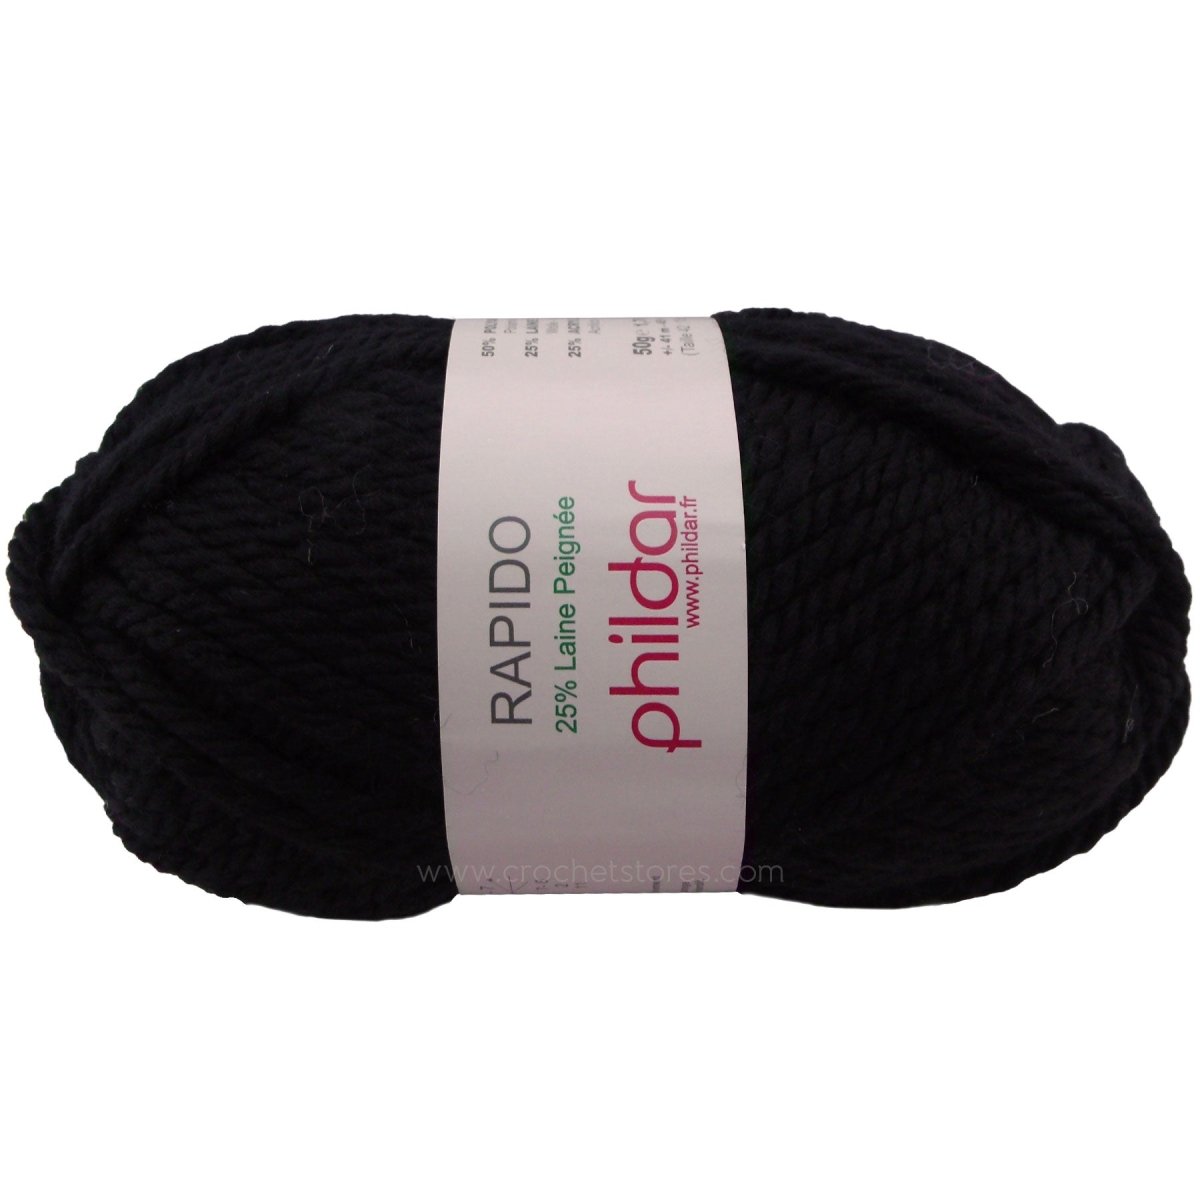 RAPIDO - Crochetstores500981-673307673465929